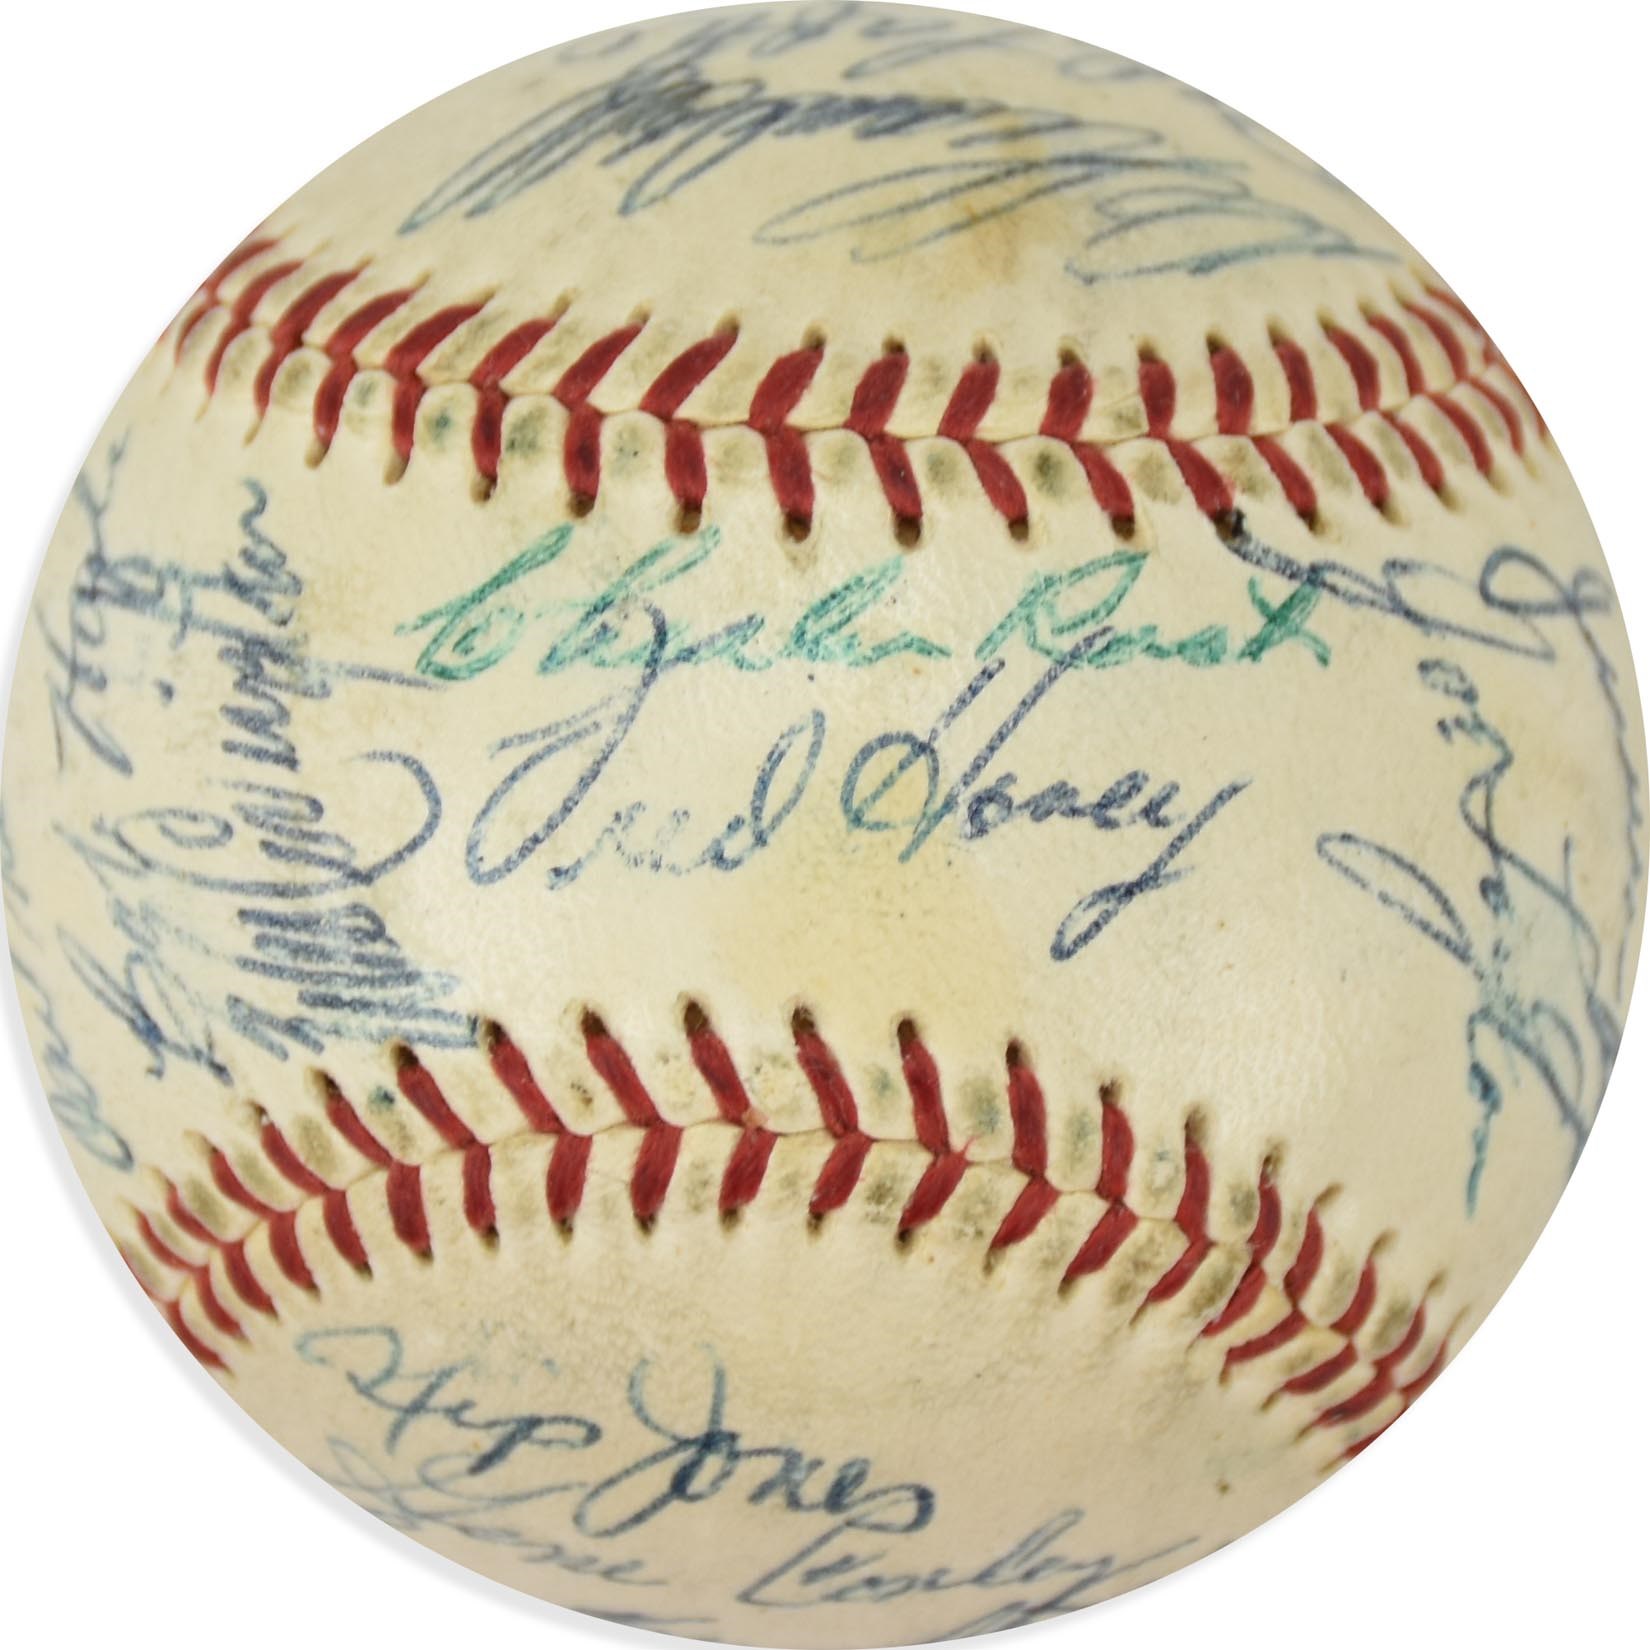 Baseball Autographs - 1957 World Champion Milwaukee Braves Team-Signed Baseball (PSA)